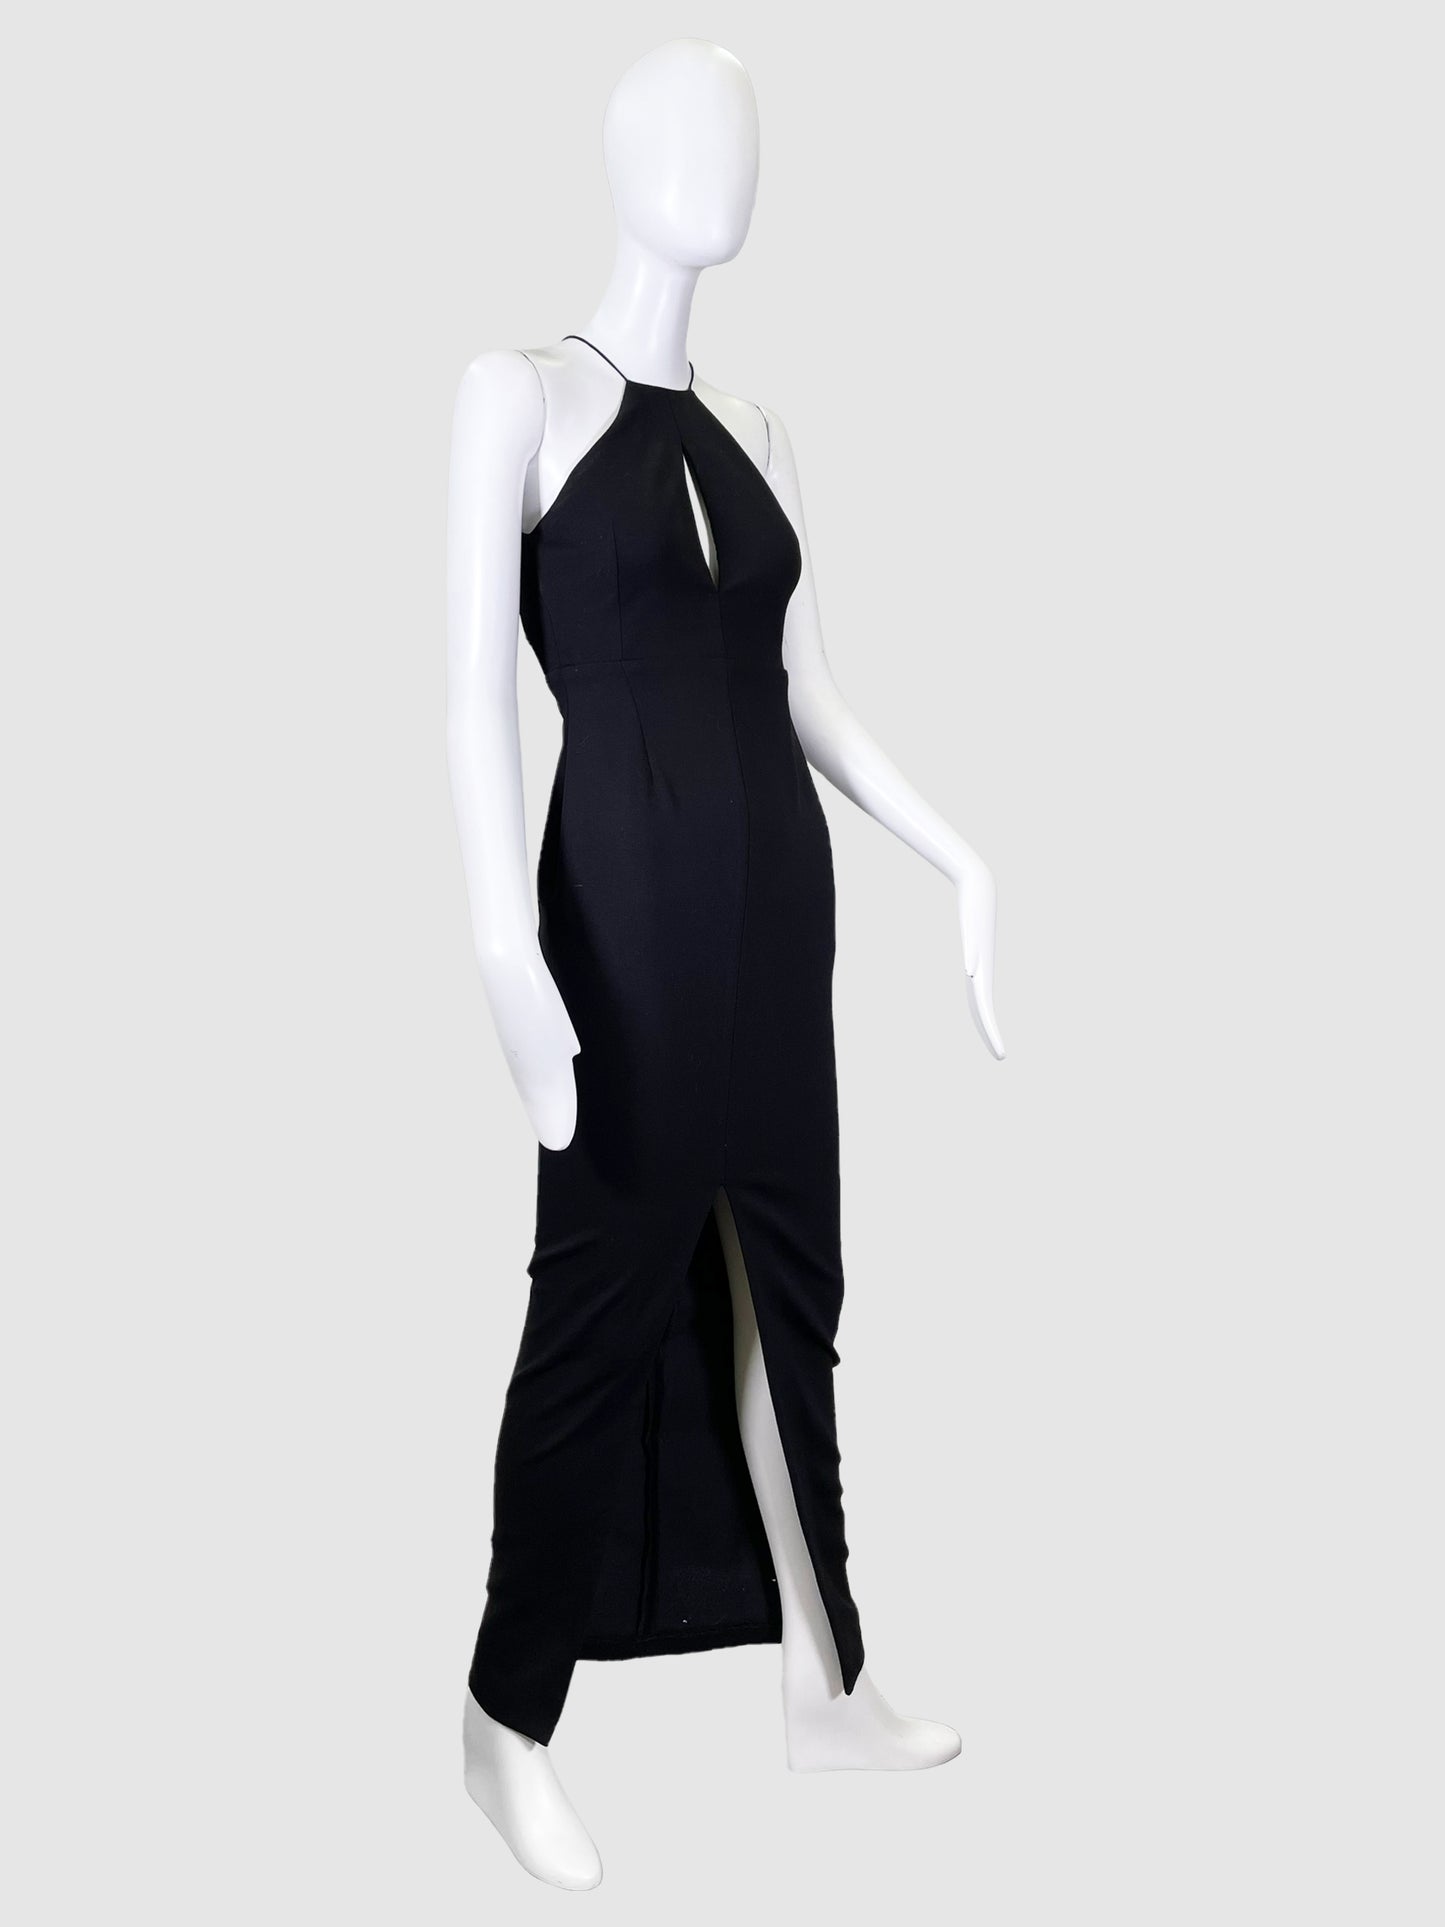 Nicholas Gown Dress - Size 2